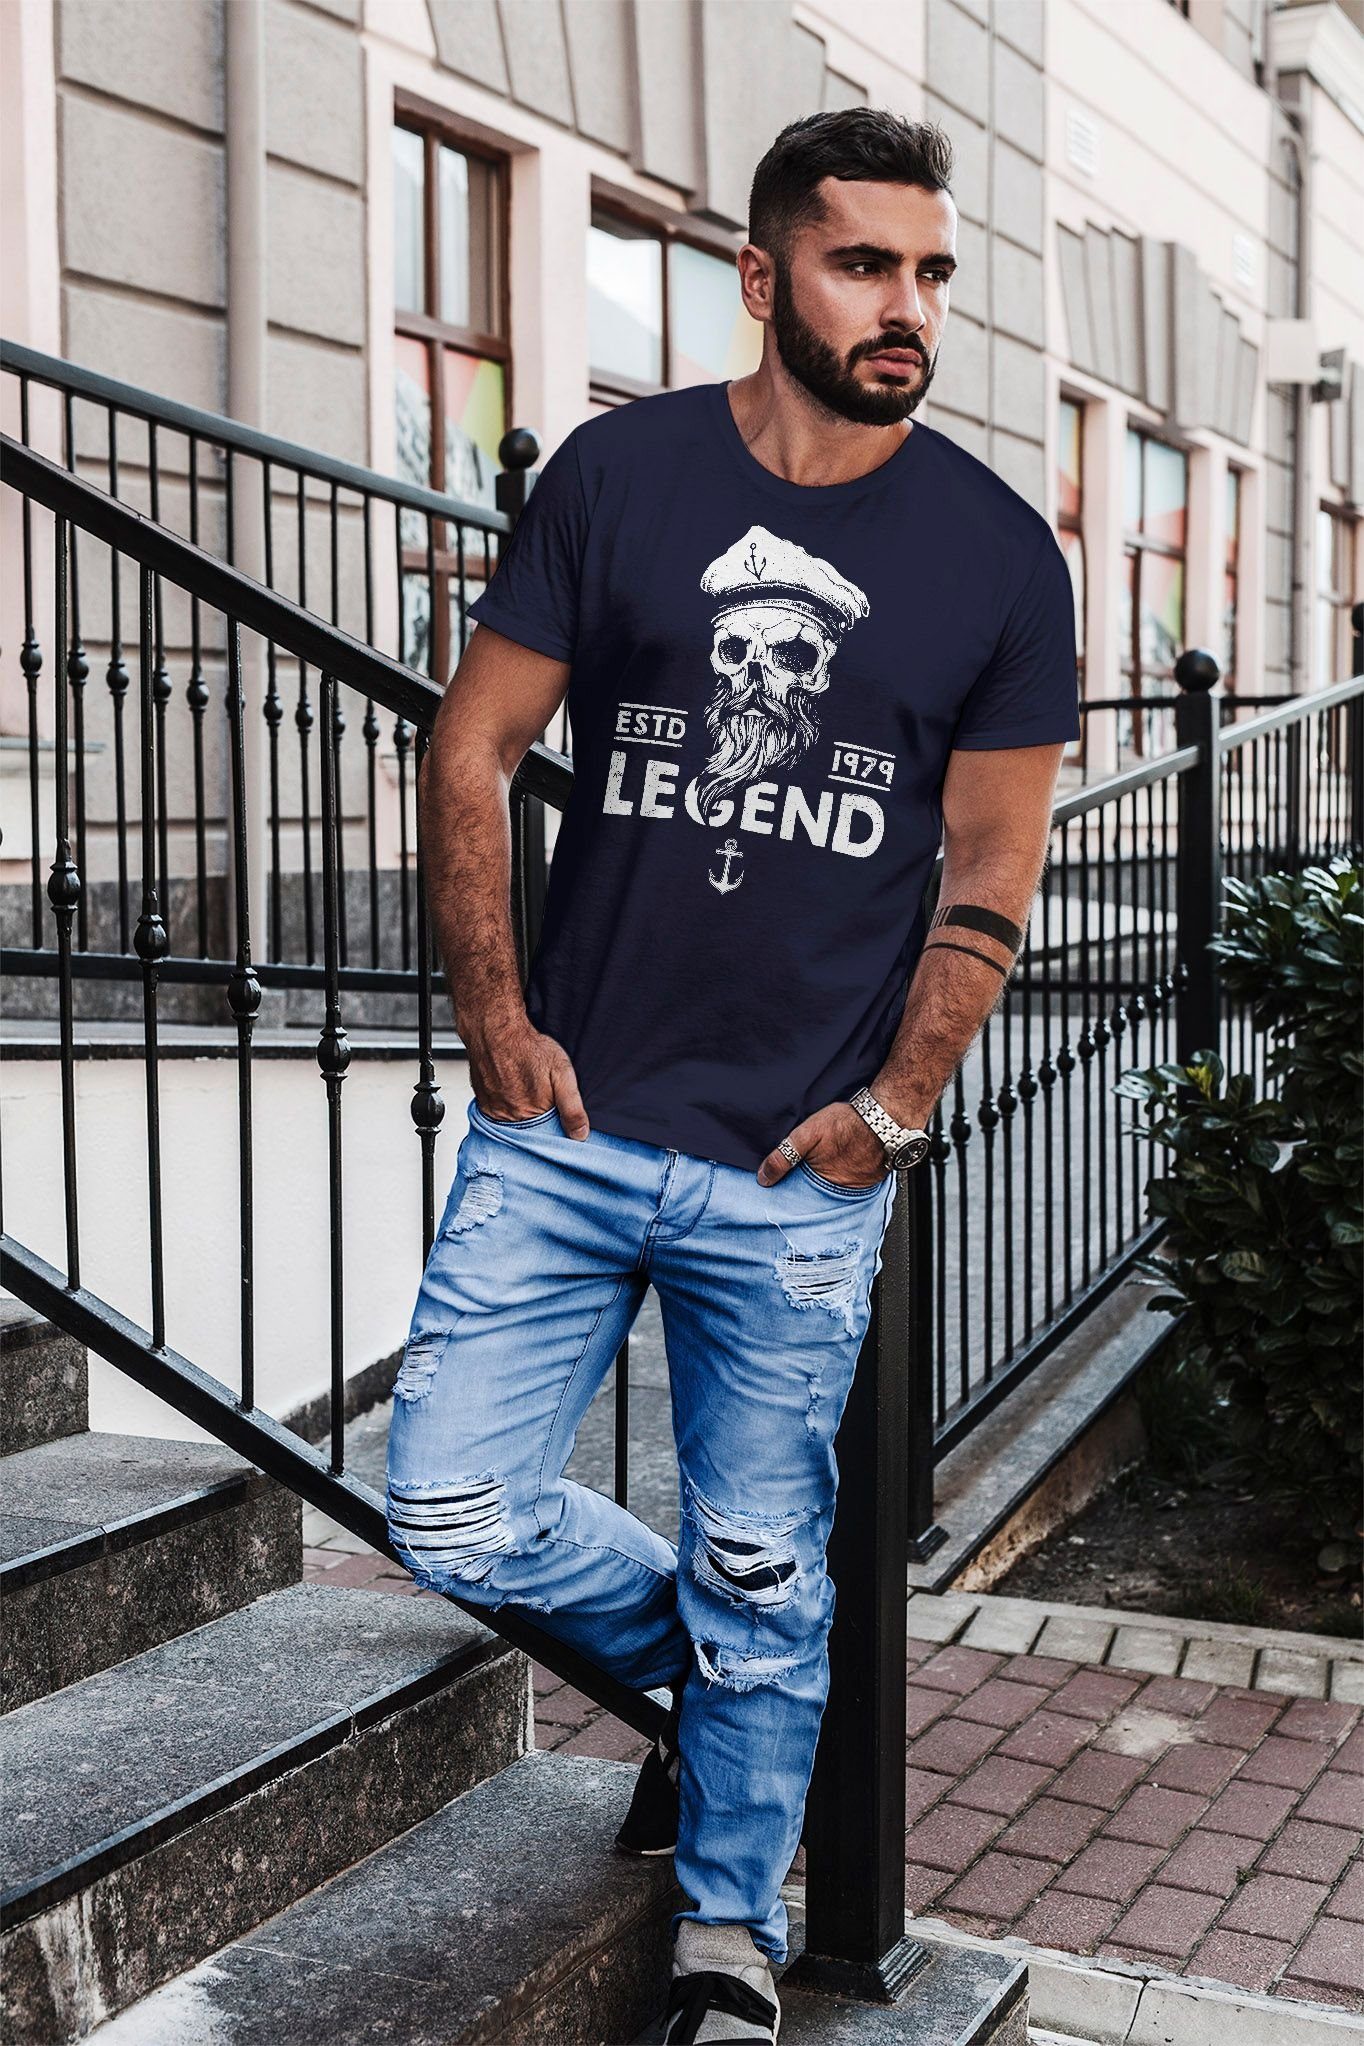 Herren T-Shirt Fit Slim Neverless® Legend Print-Shirt Kapitän mit navy Totenkopf Skull Print Bart Neverless Captain